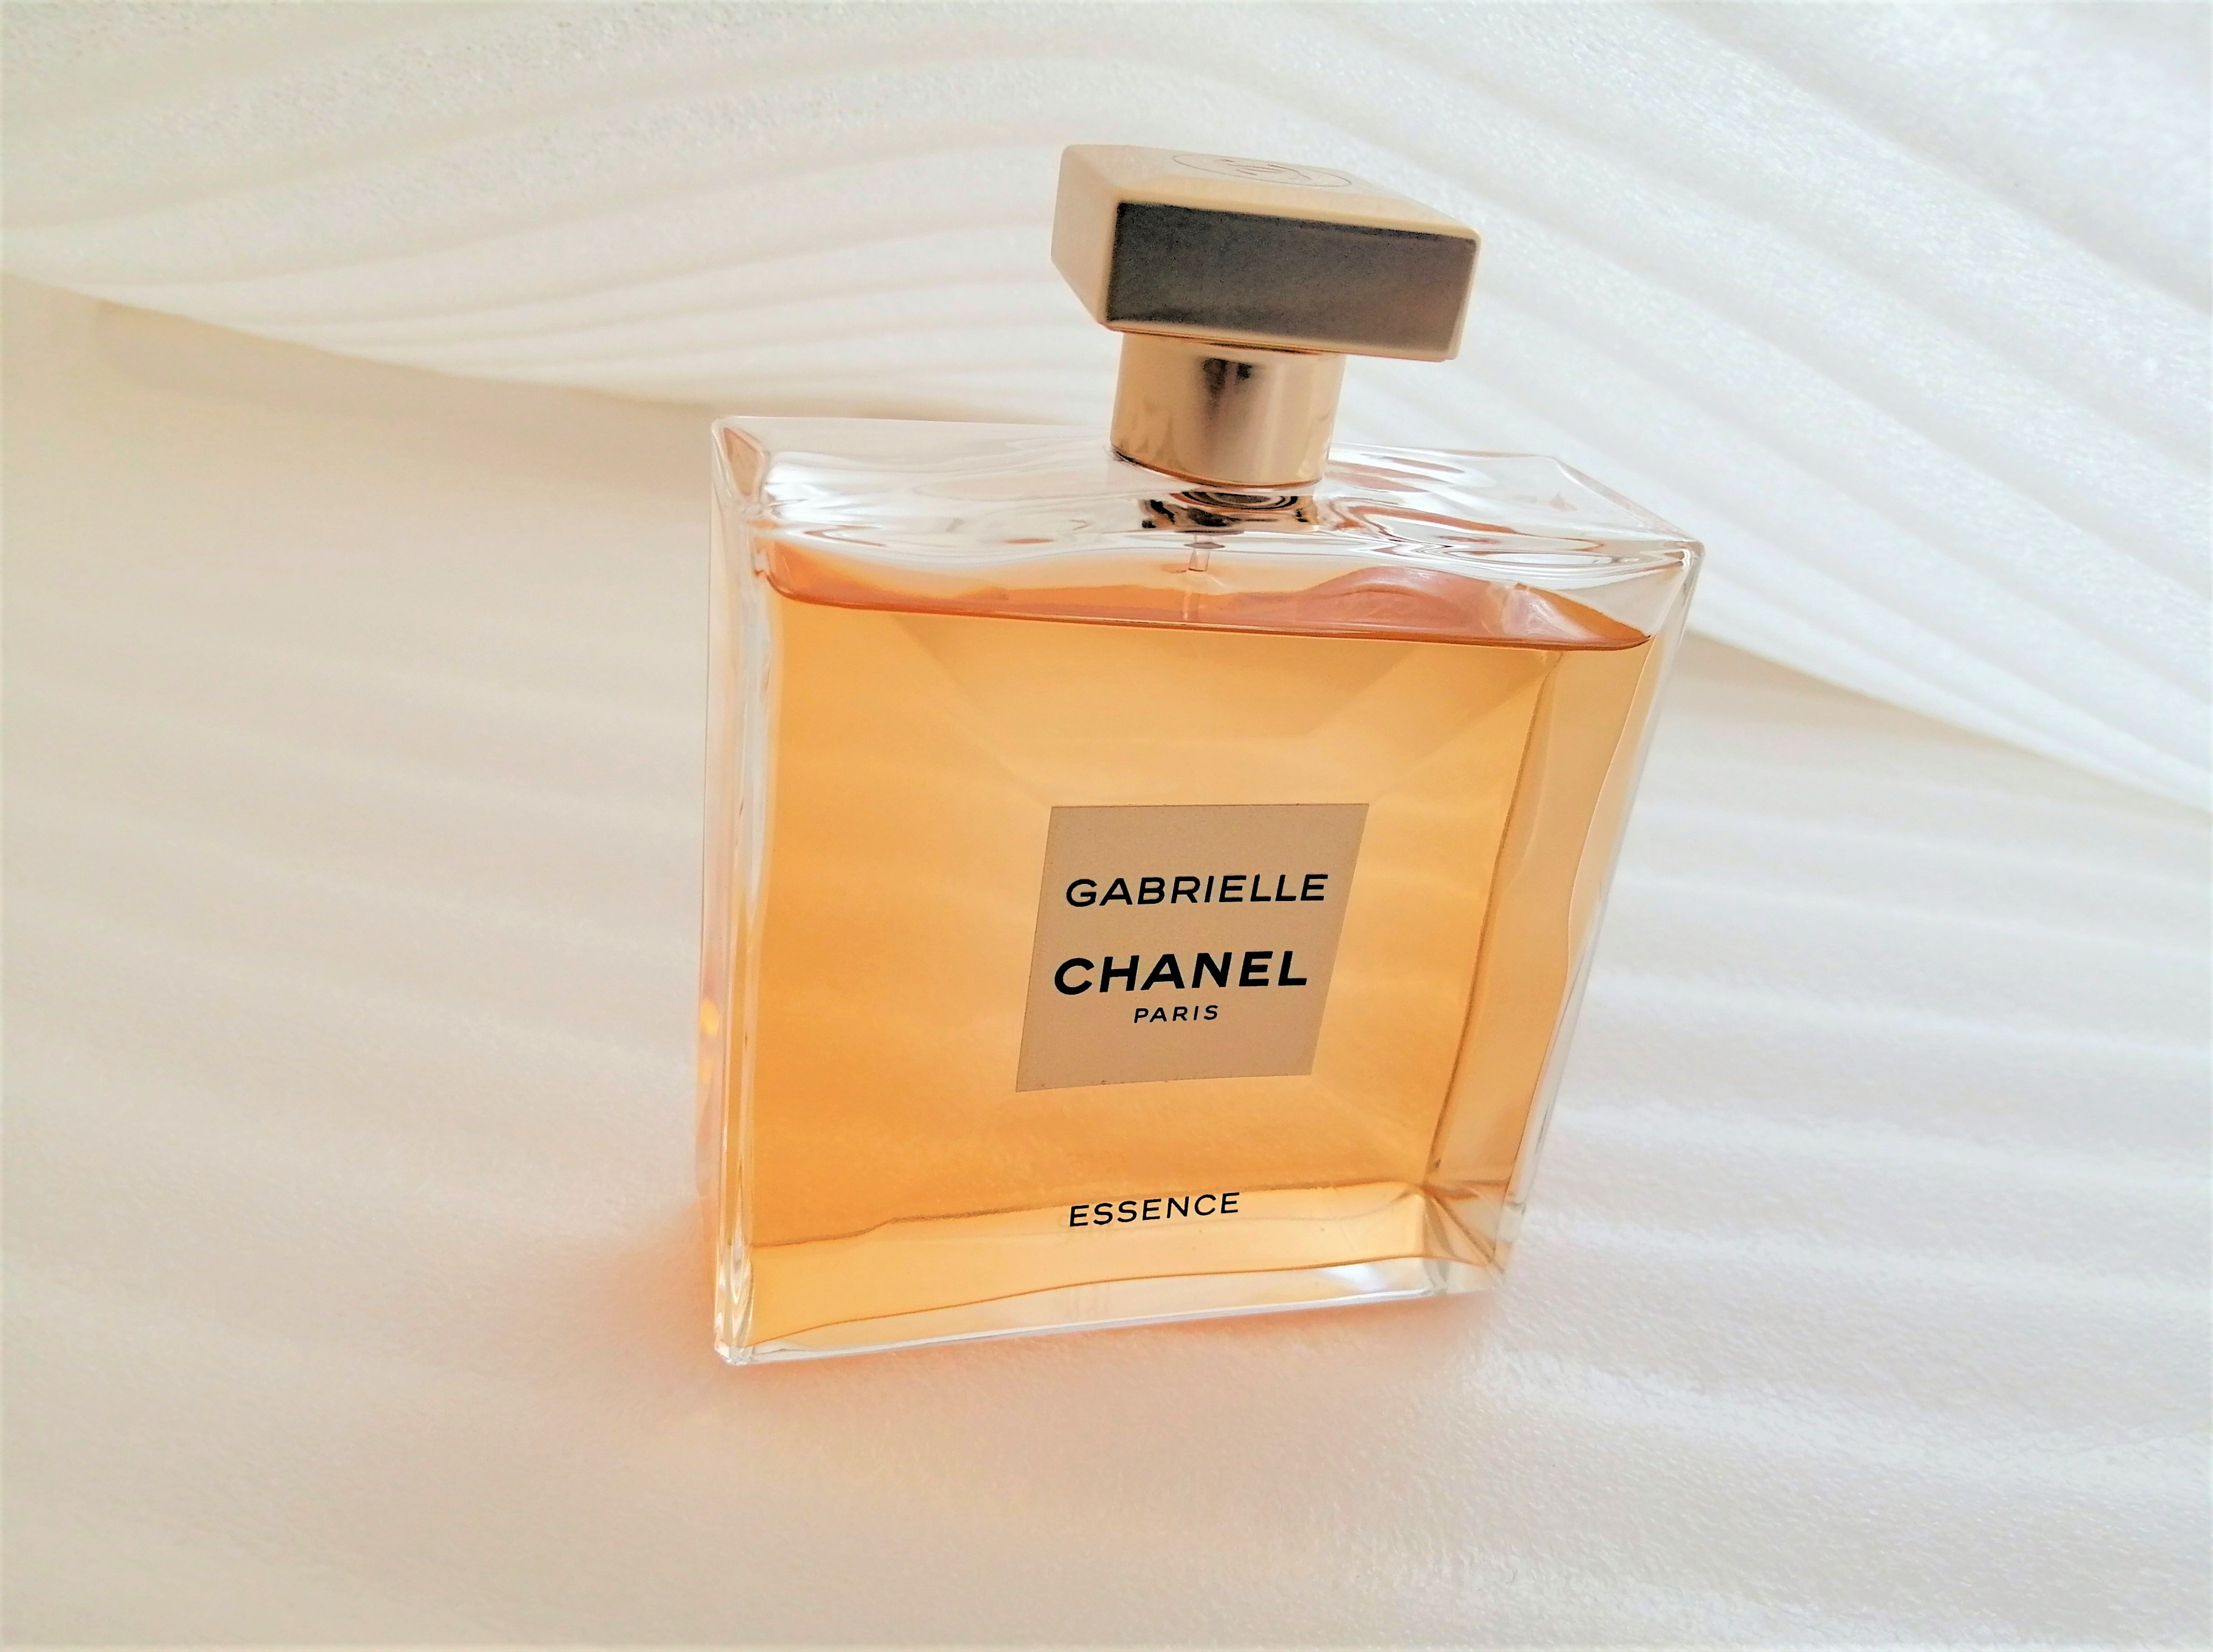 Gabrielle Chanel Essence Review: The Richer Remix